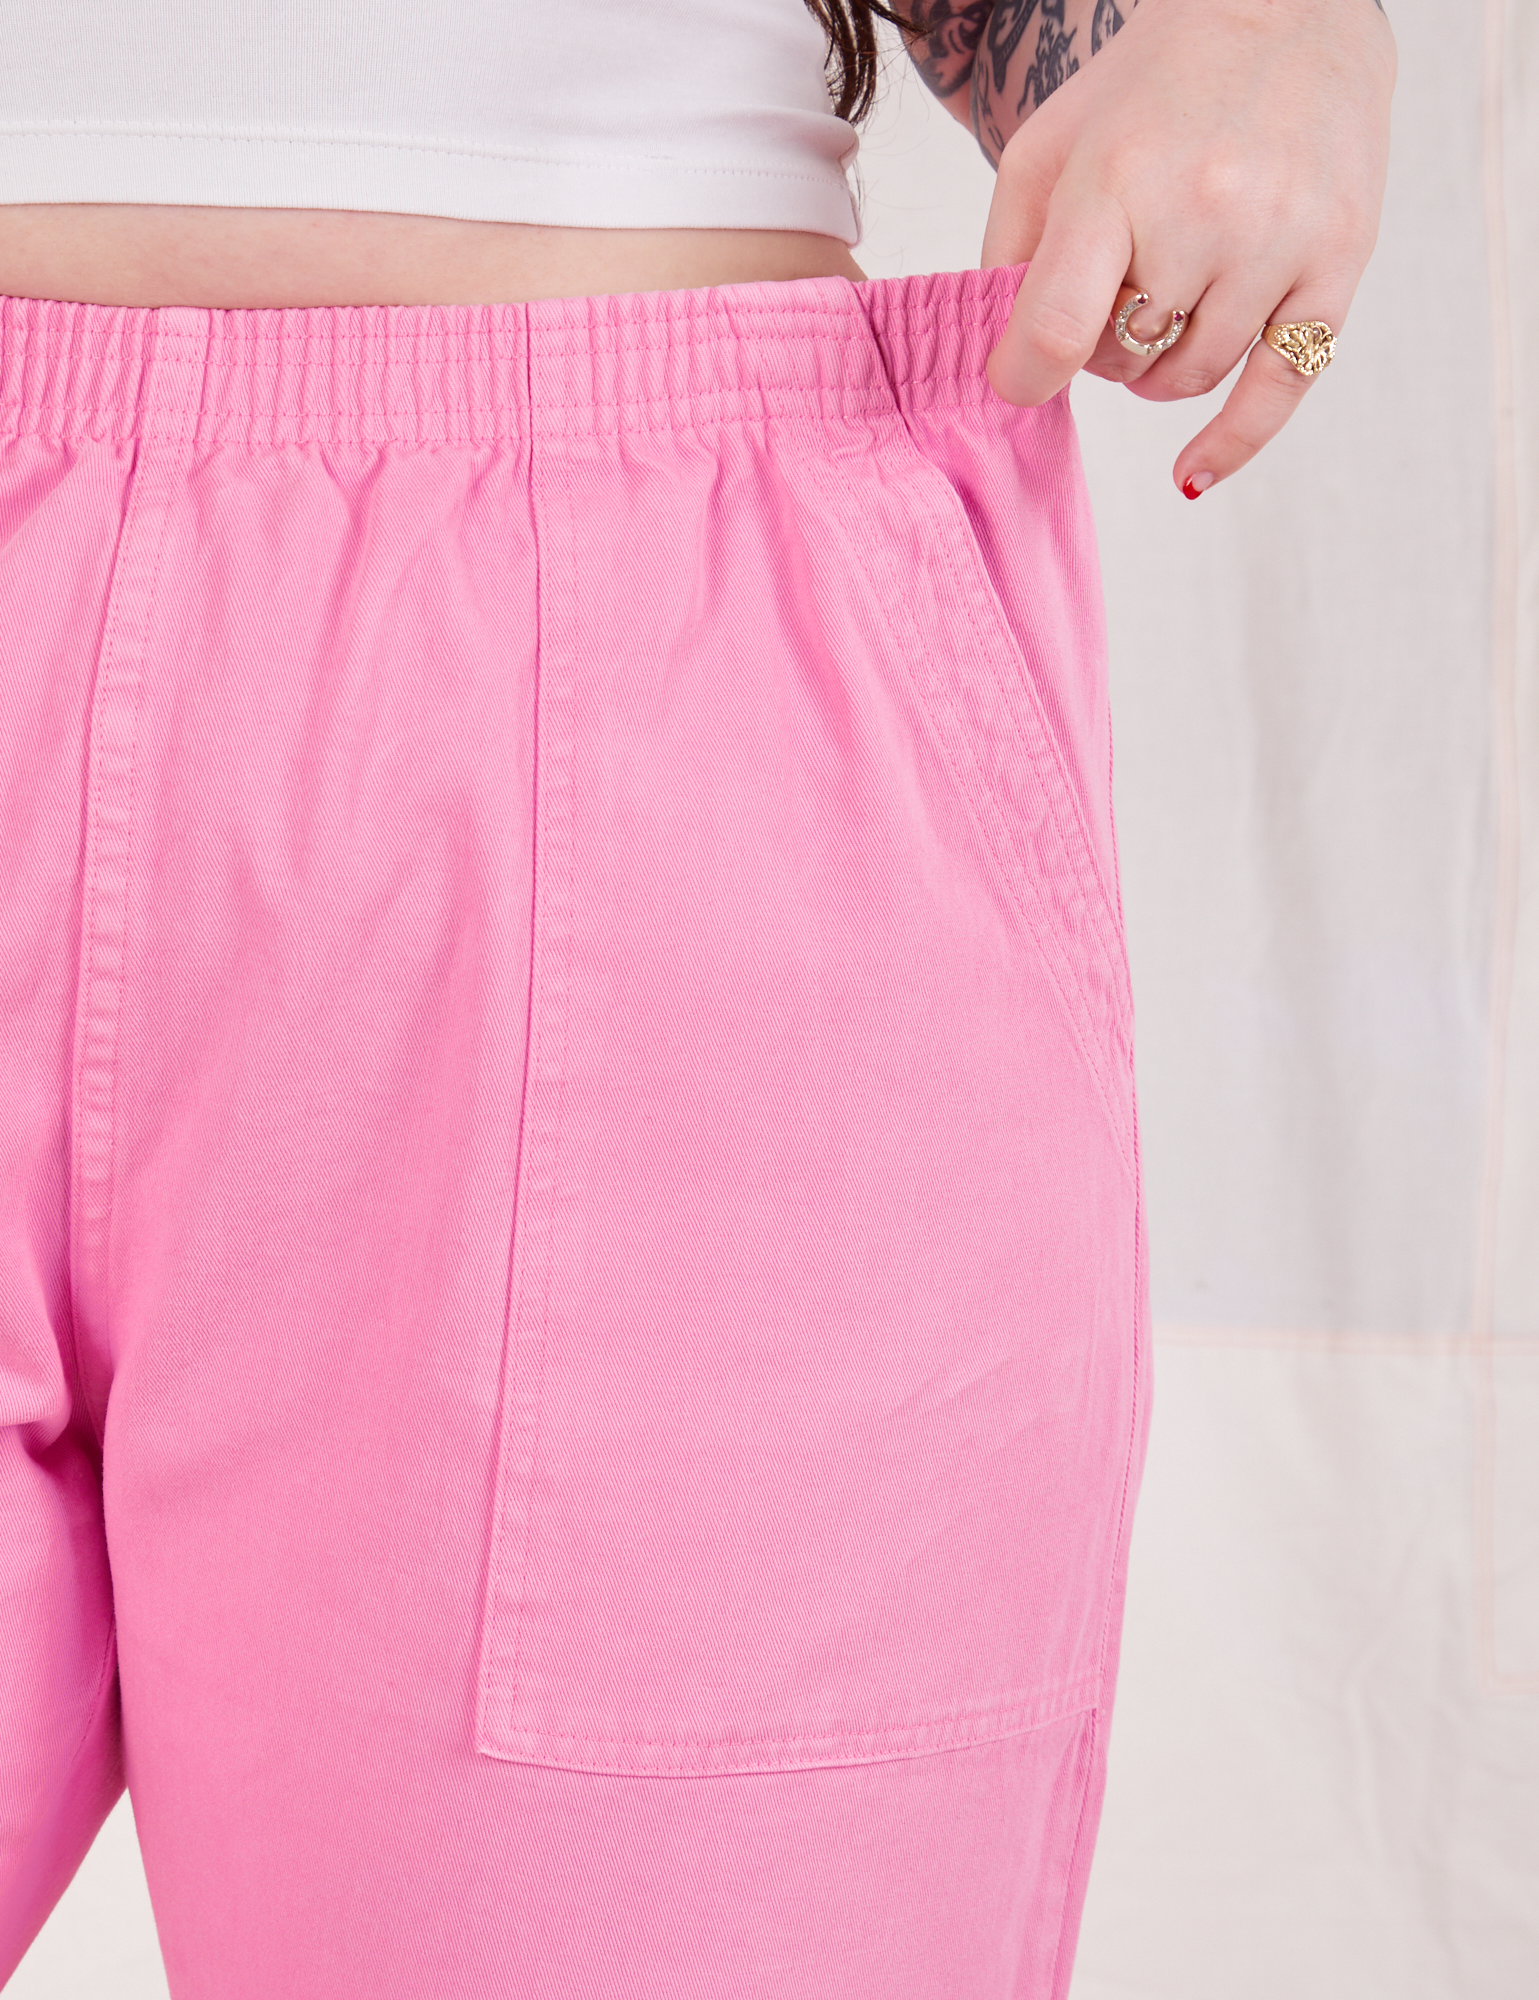 Action Pants in Bubblegum Pink front close up